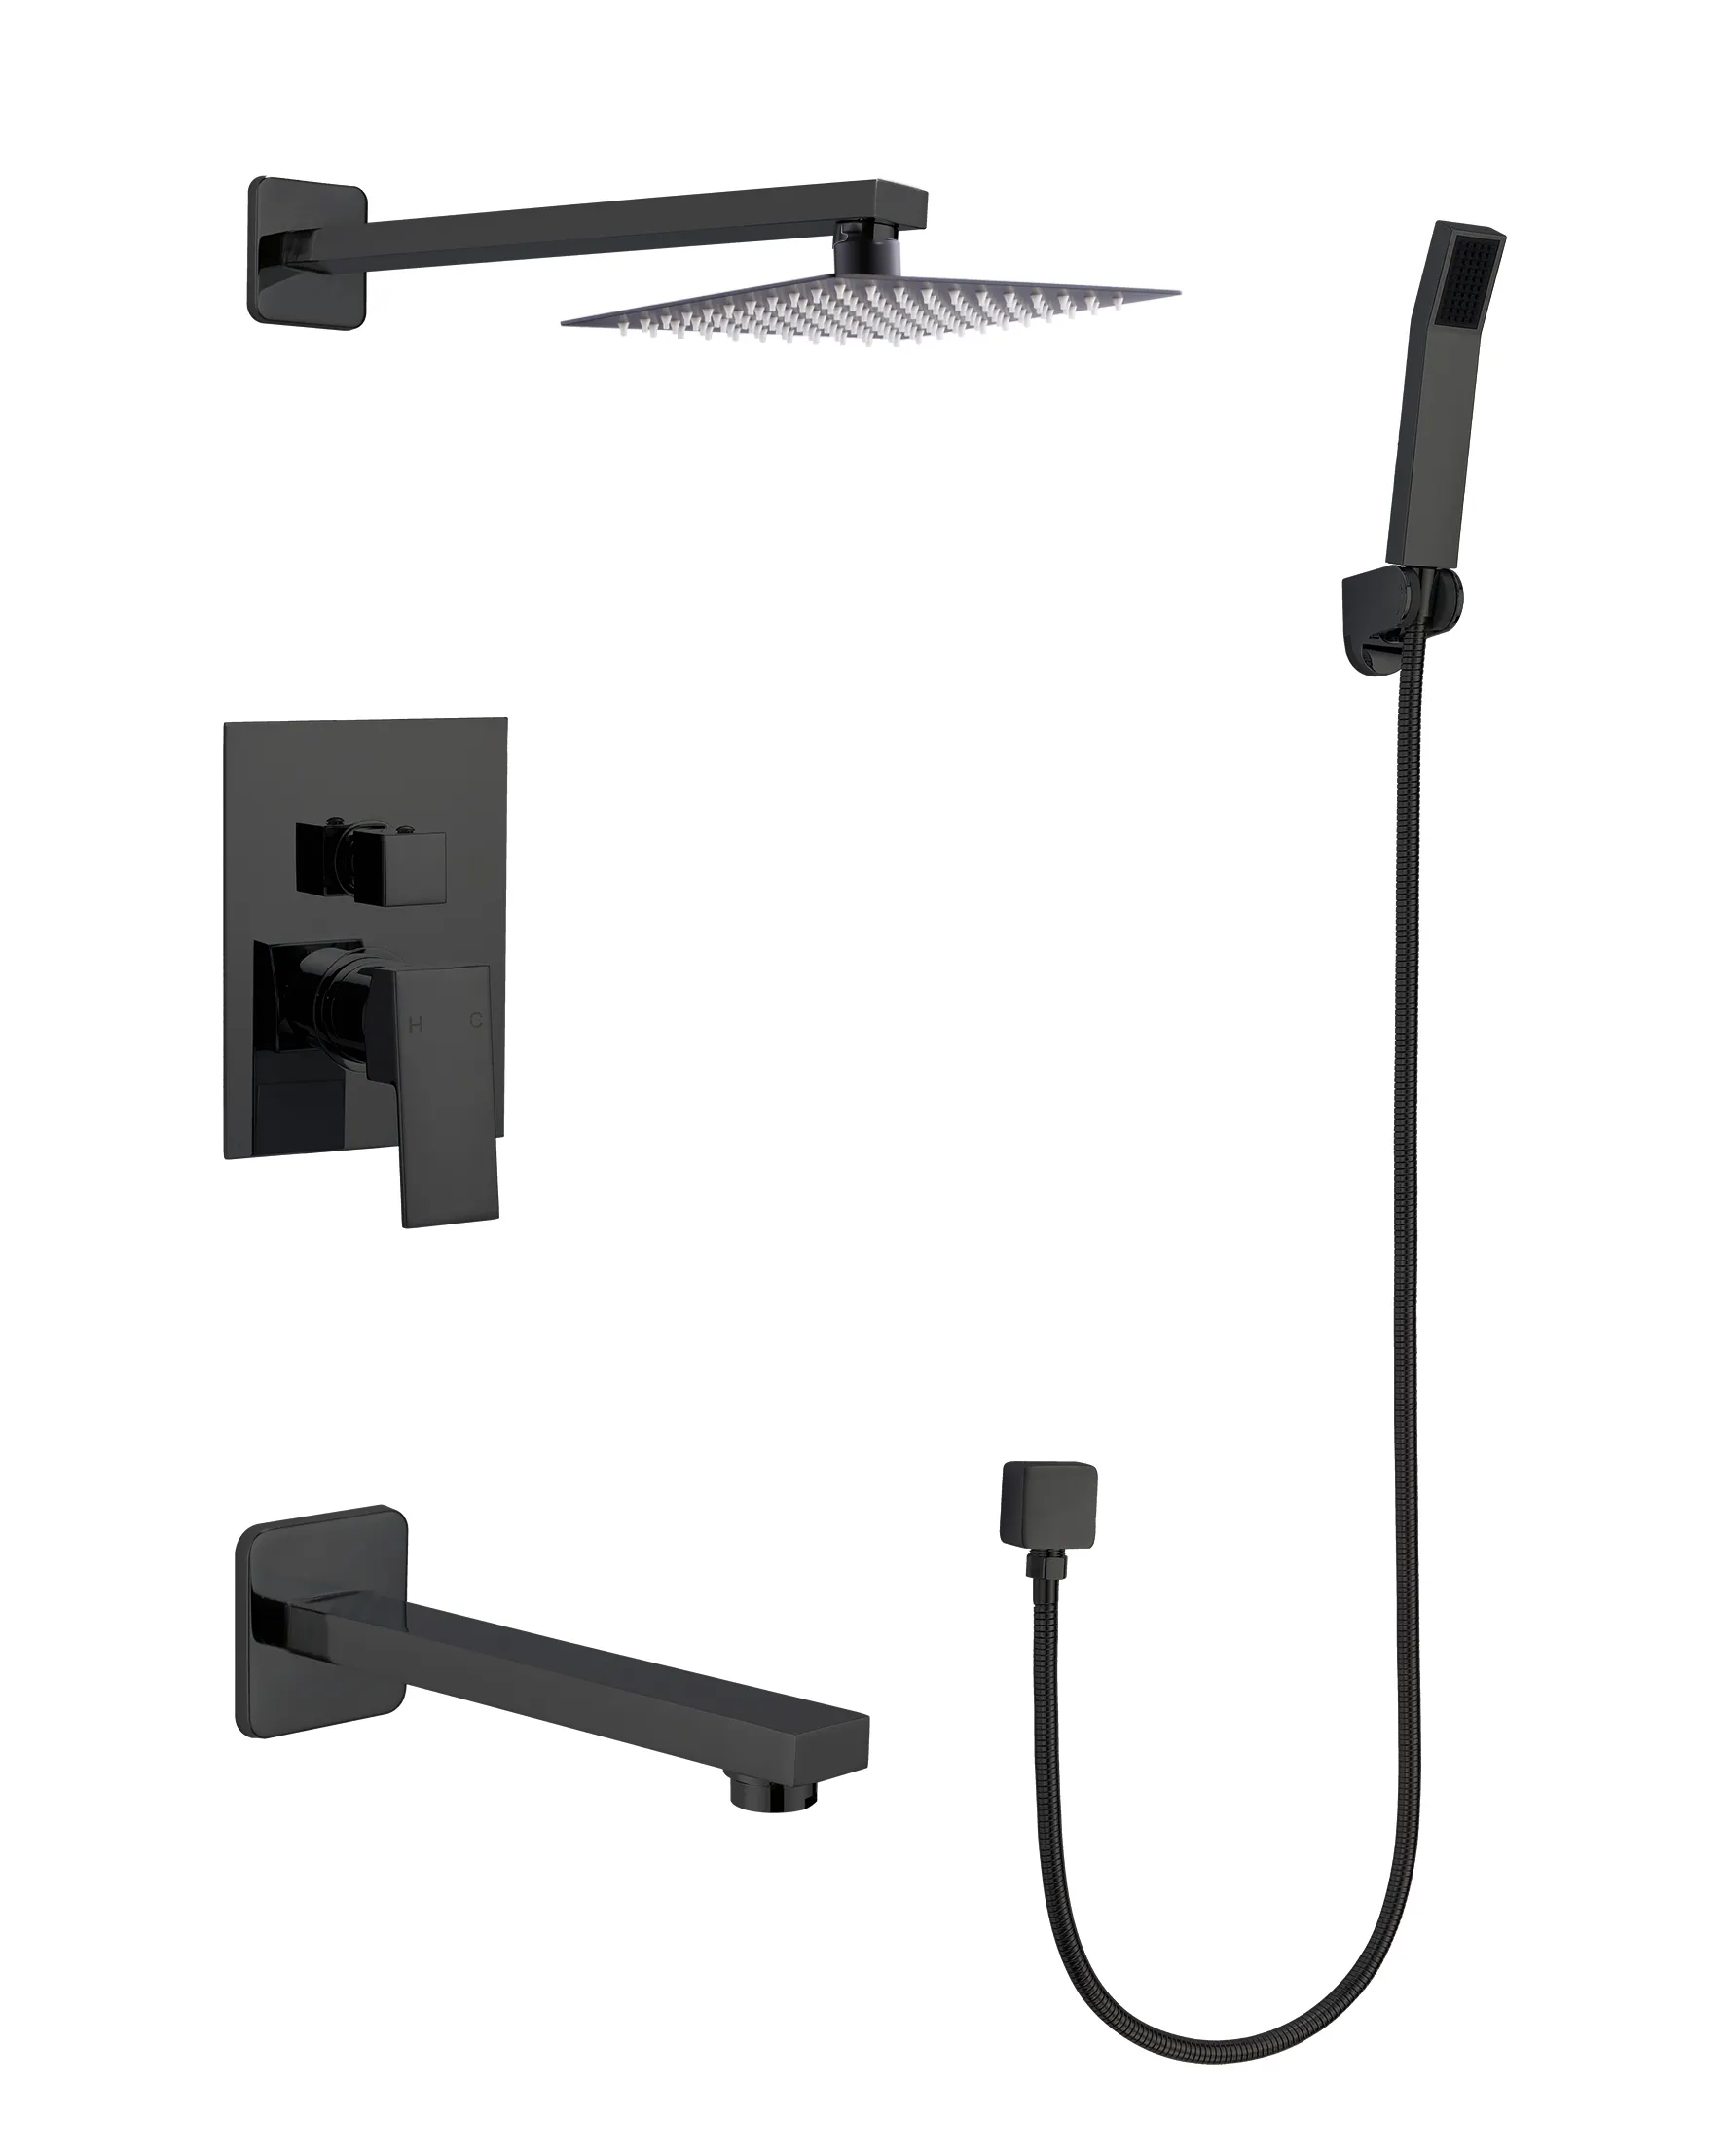 Shower system 8 or 12-inch high pressure bathroom Shower Faucet concealed mixer set wall mounted black shower set